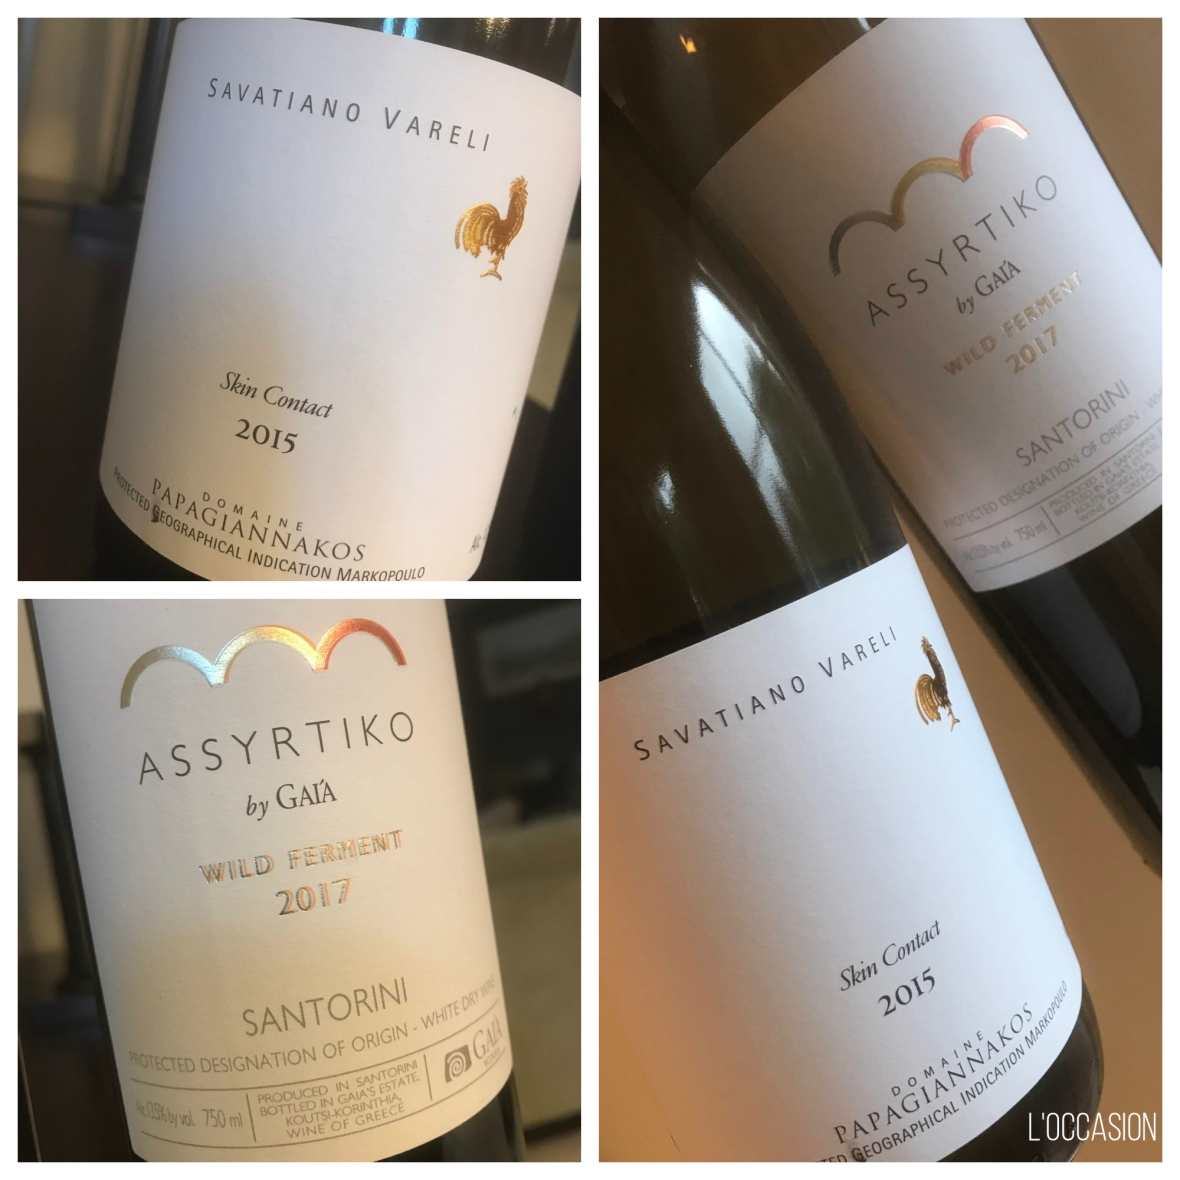 Assyrtiko, Savatiano, Skin contact wine, orange wine, natural wine, wild ferment, Santorini, Papaginannakos